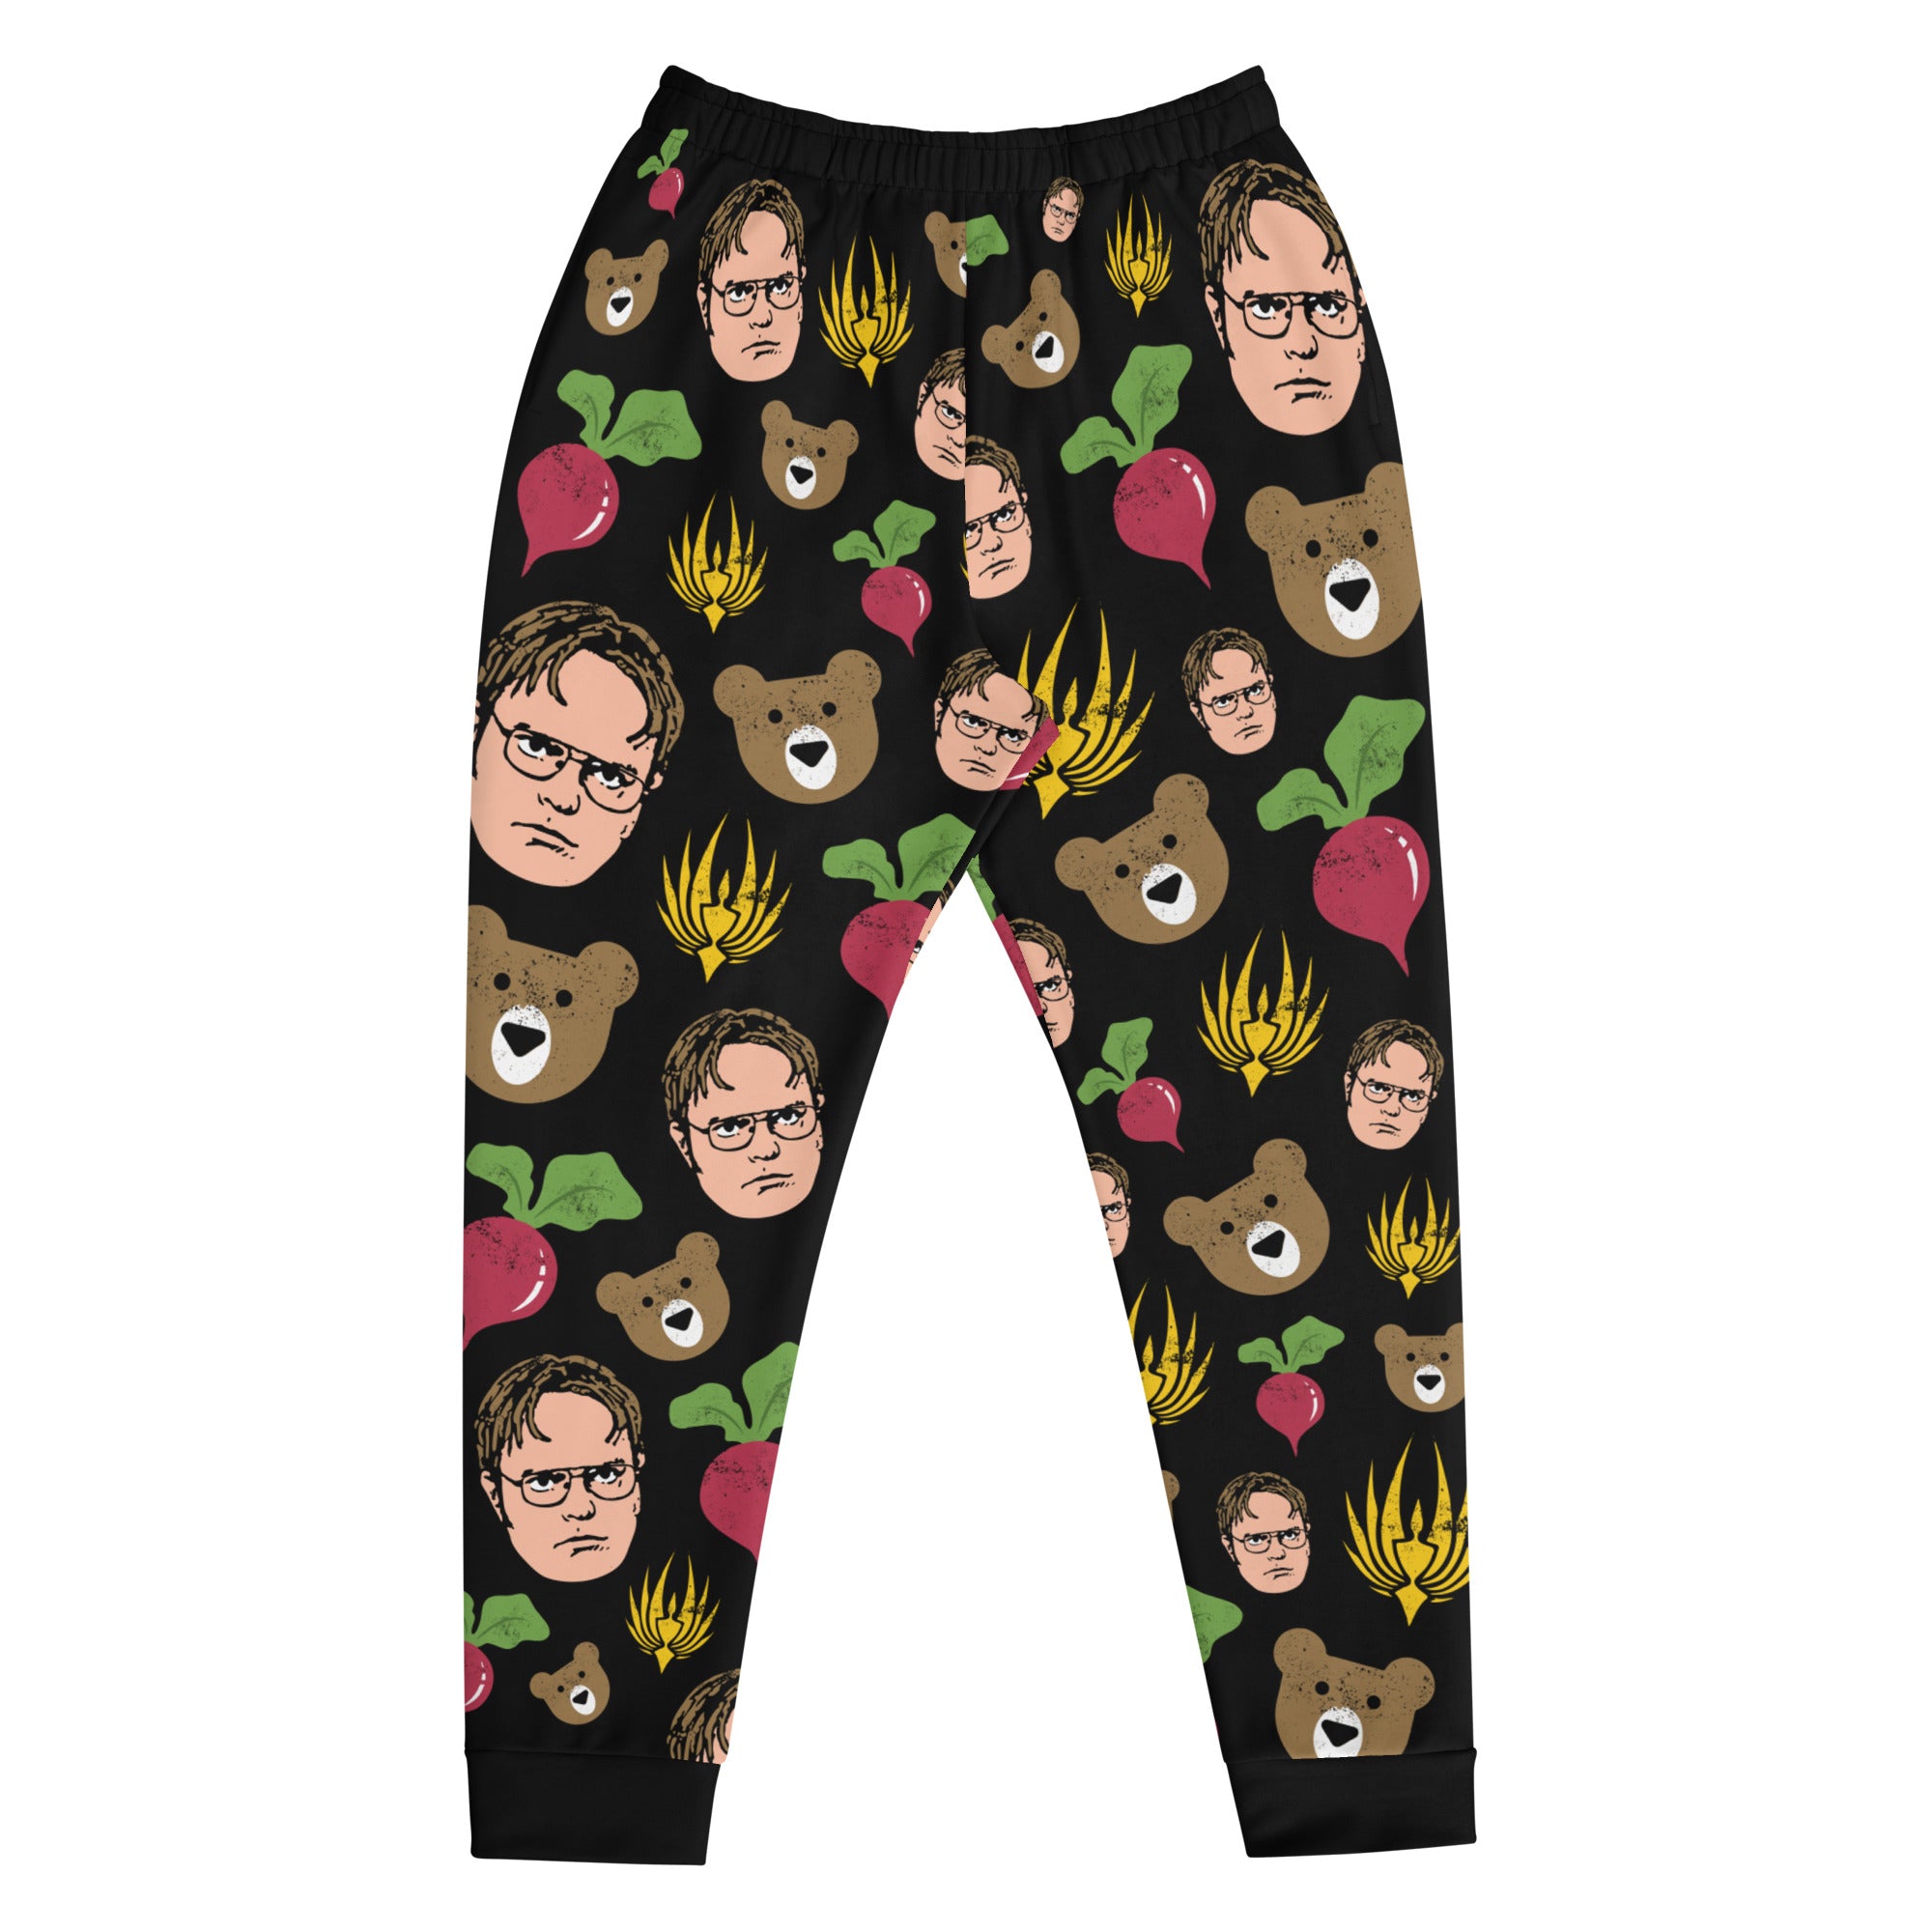 Bears Beets Battlestar Galactica - Pajama Lounge Pants